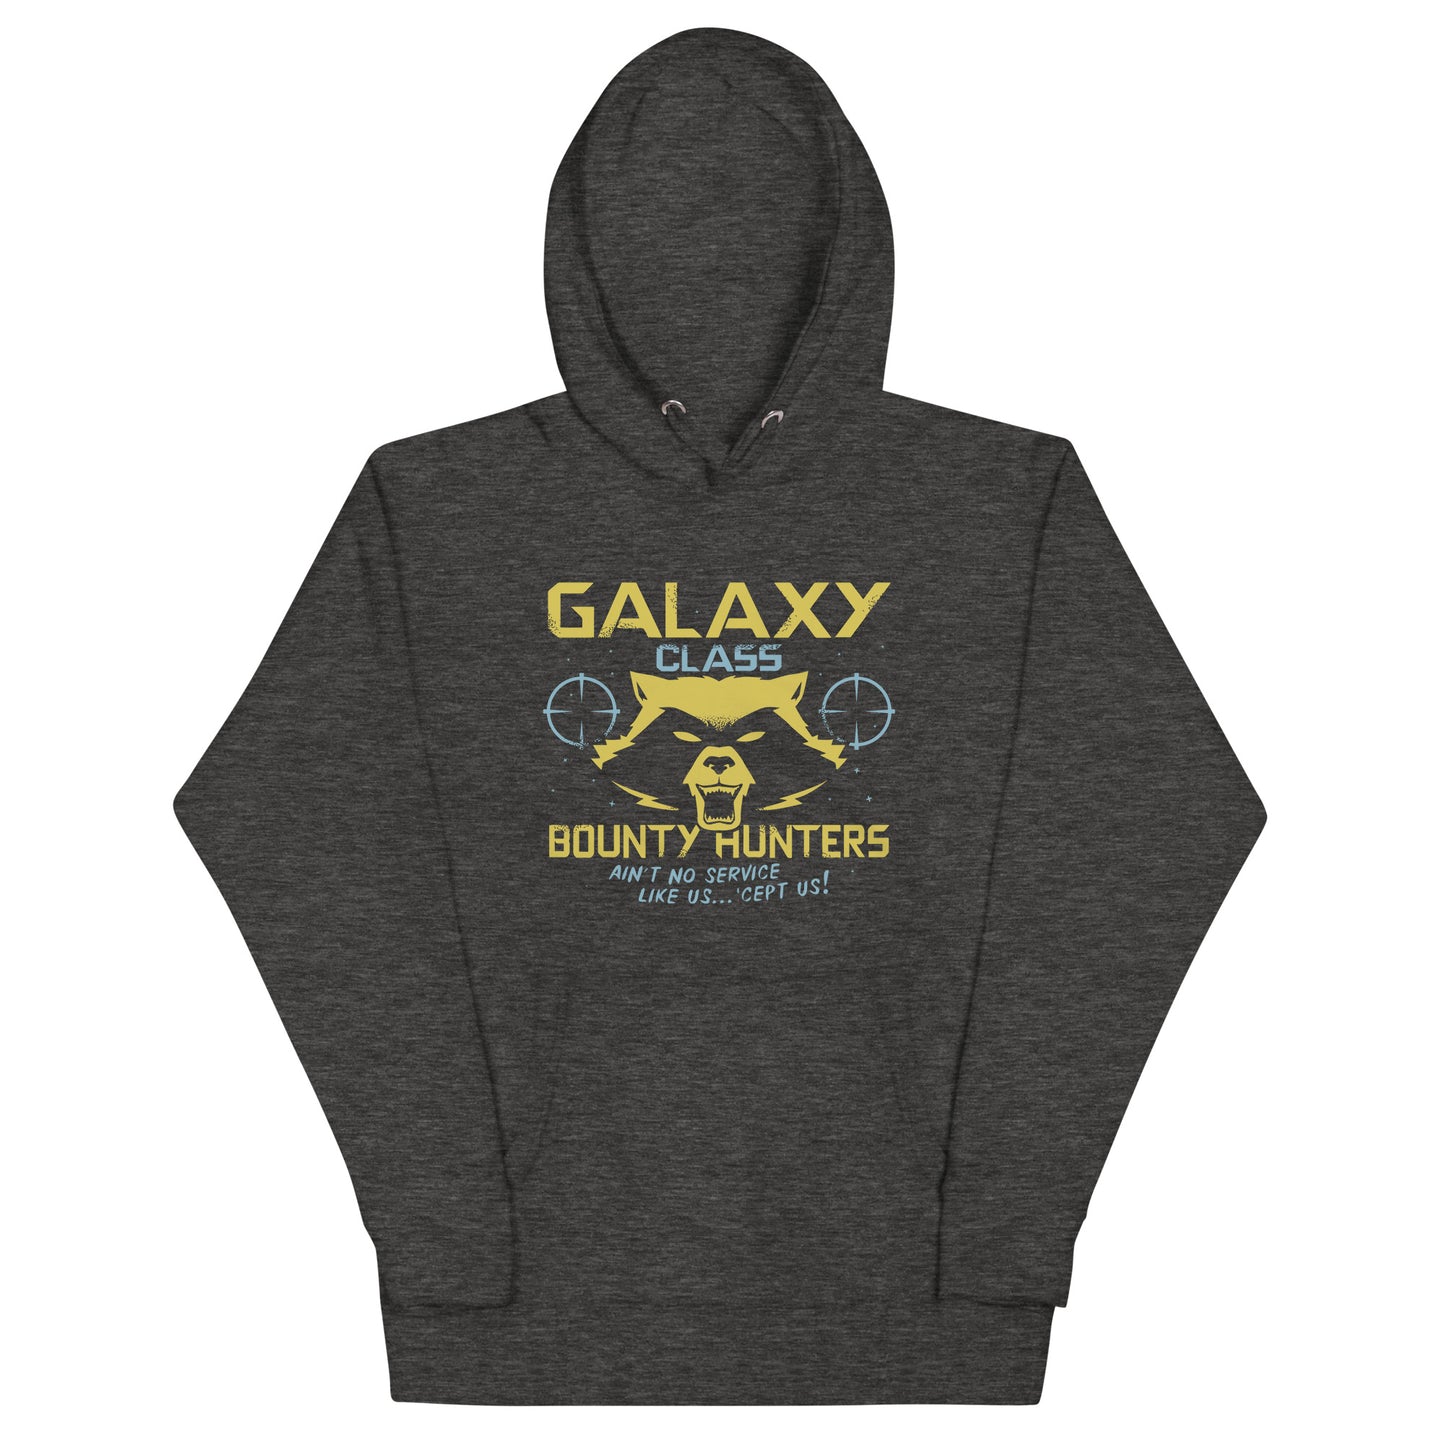 Galaxy Class Bounty Hunters Unisex Hoodie